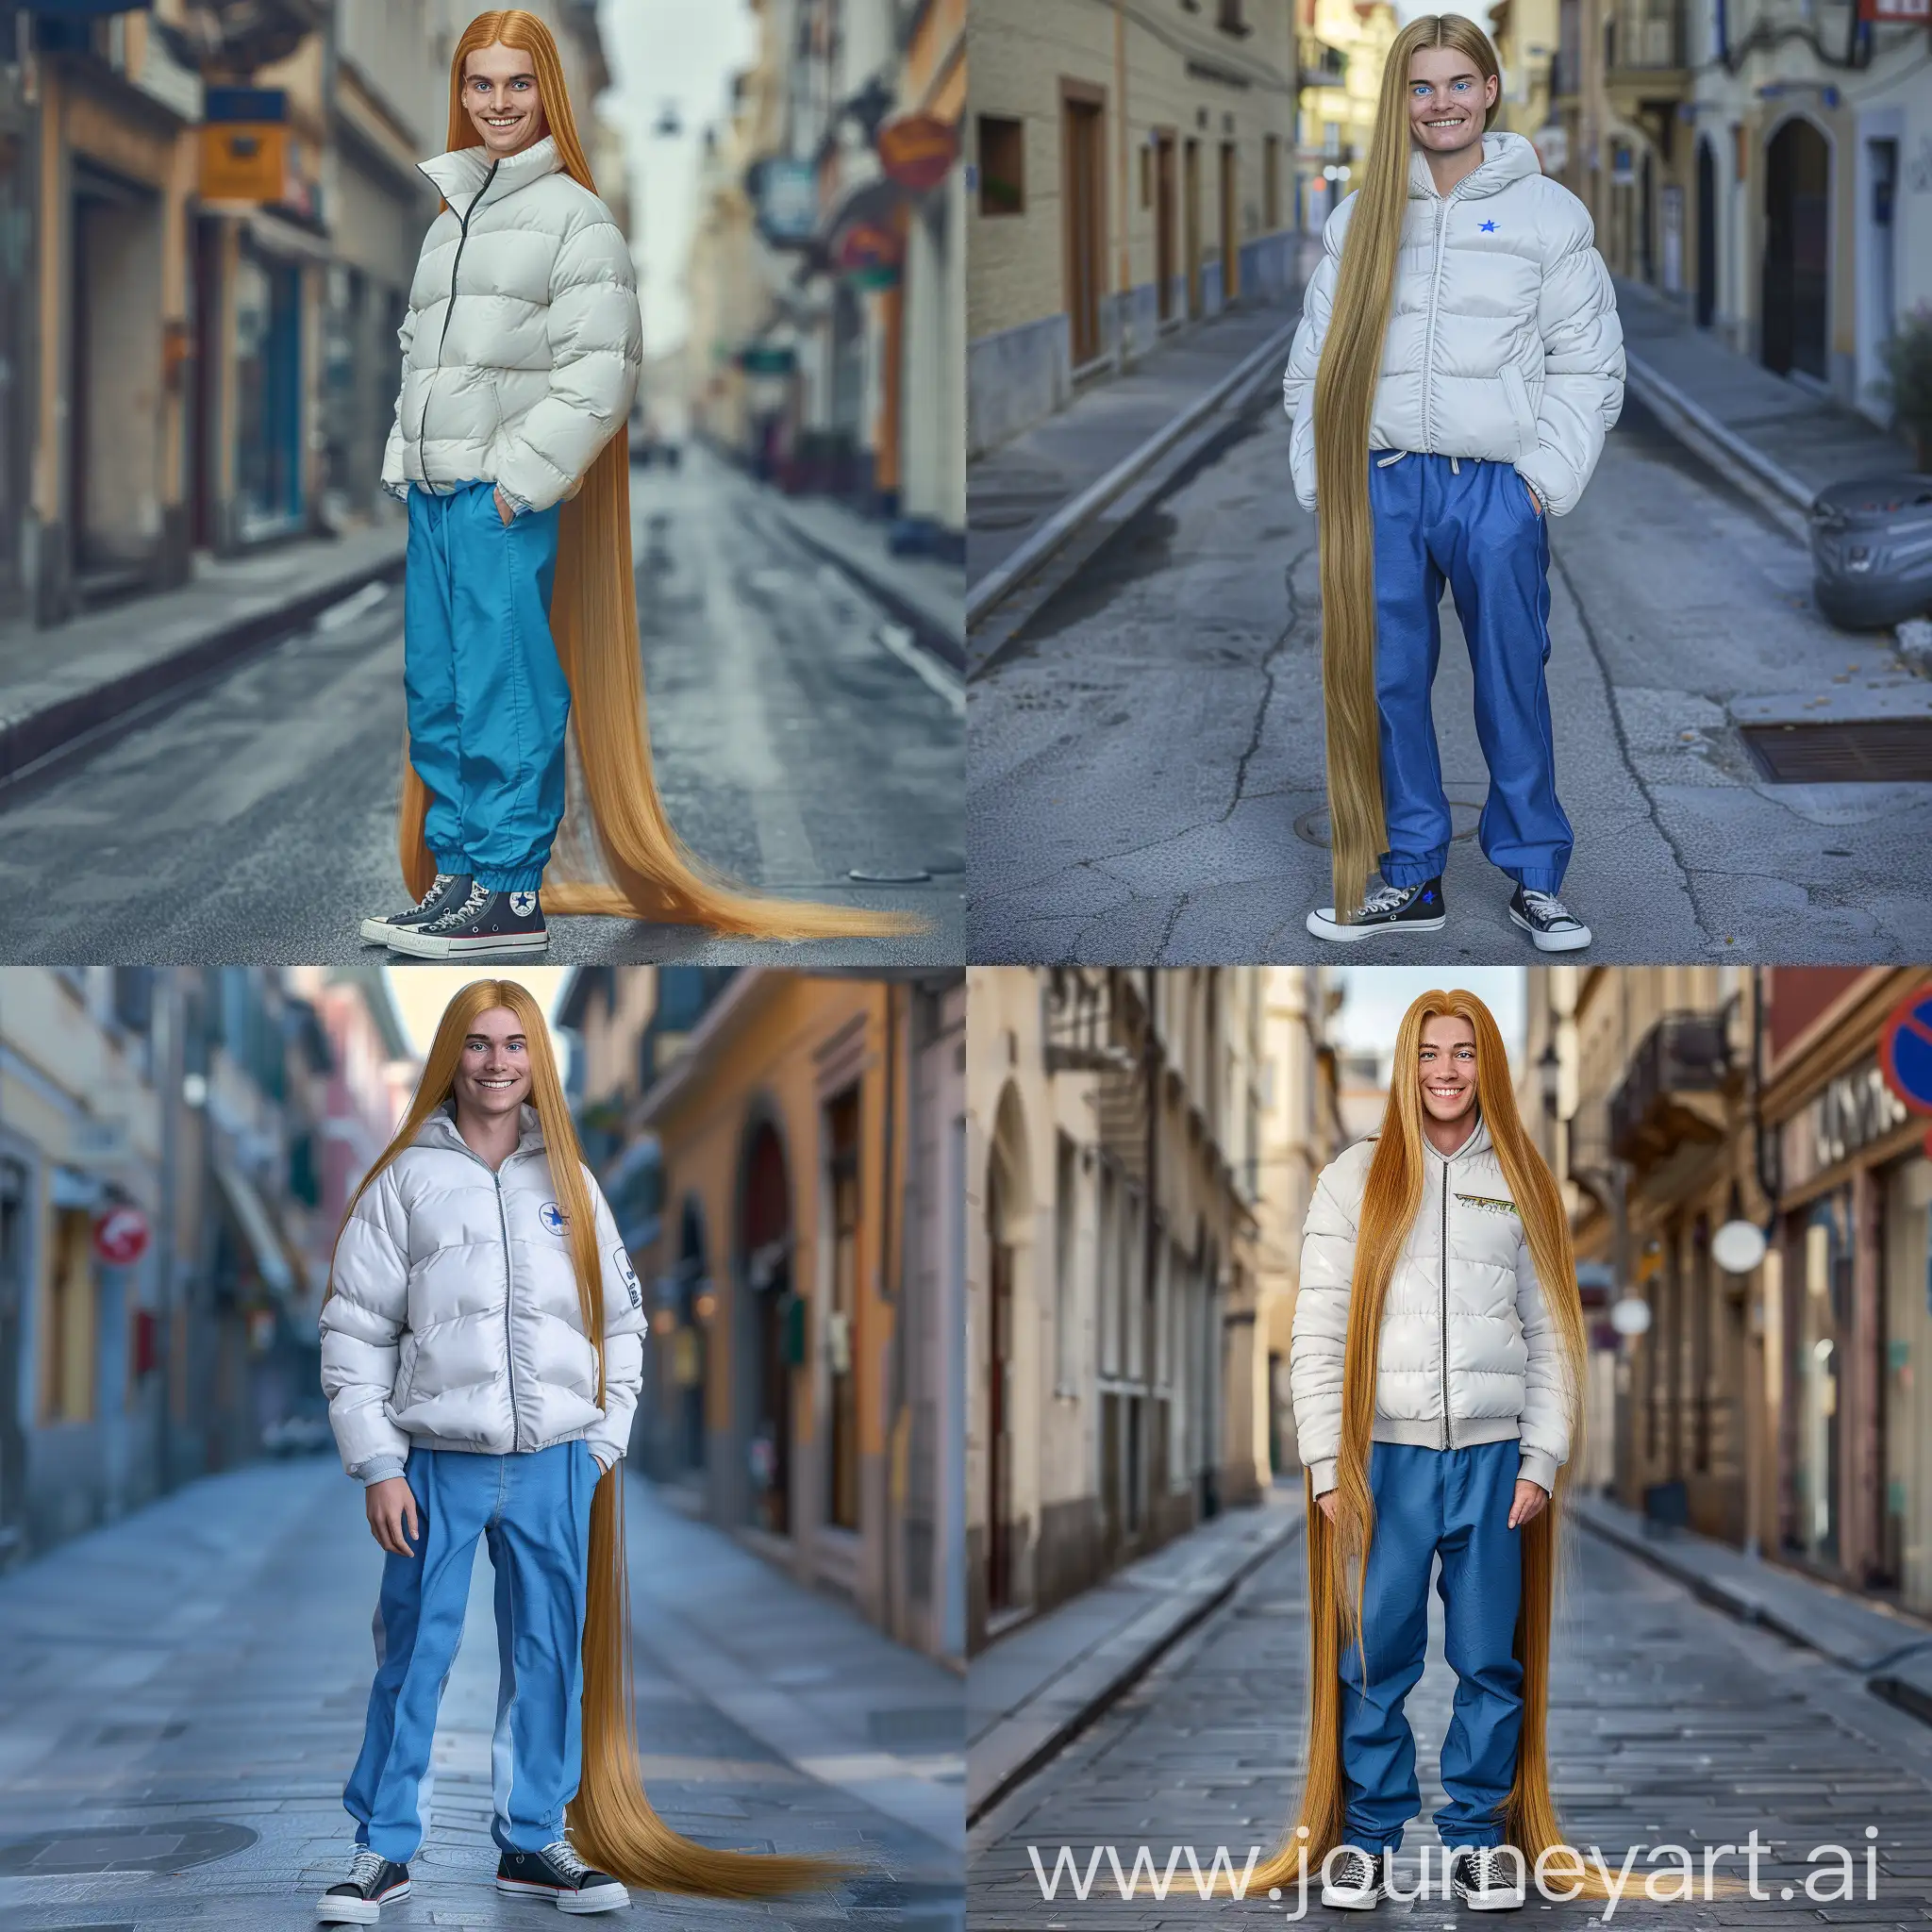 European-Man-with-Long-Golden-Hair-Smiling-in-Street-Setting